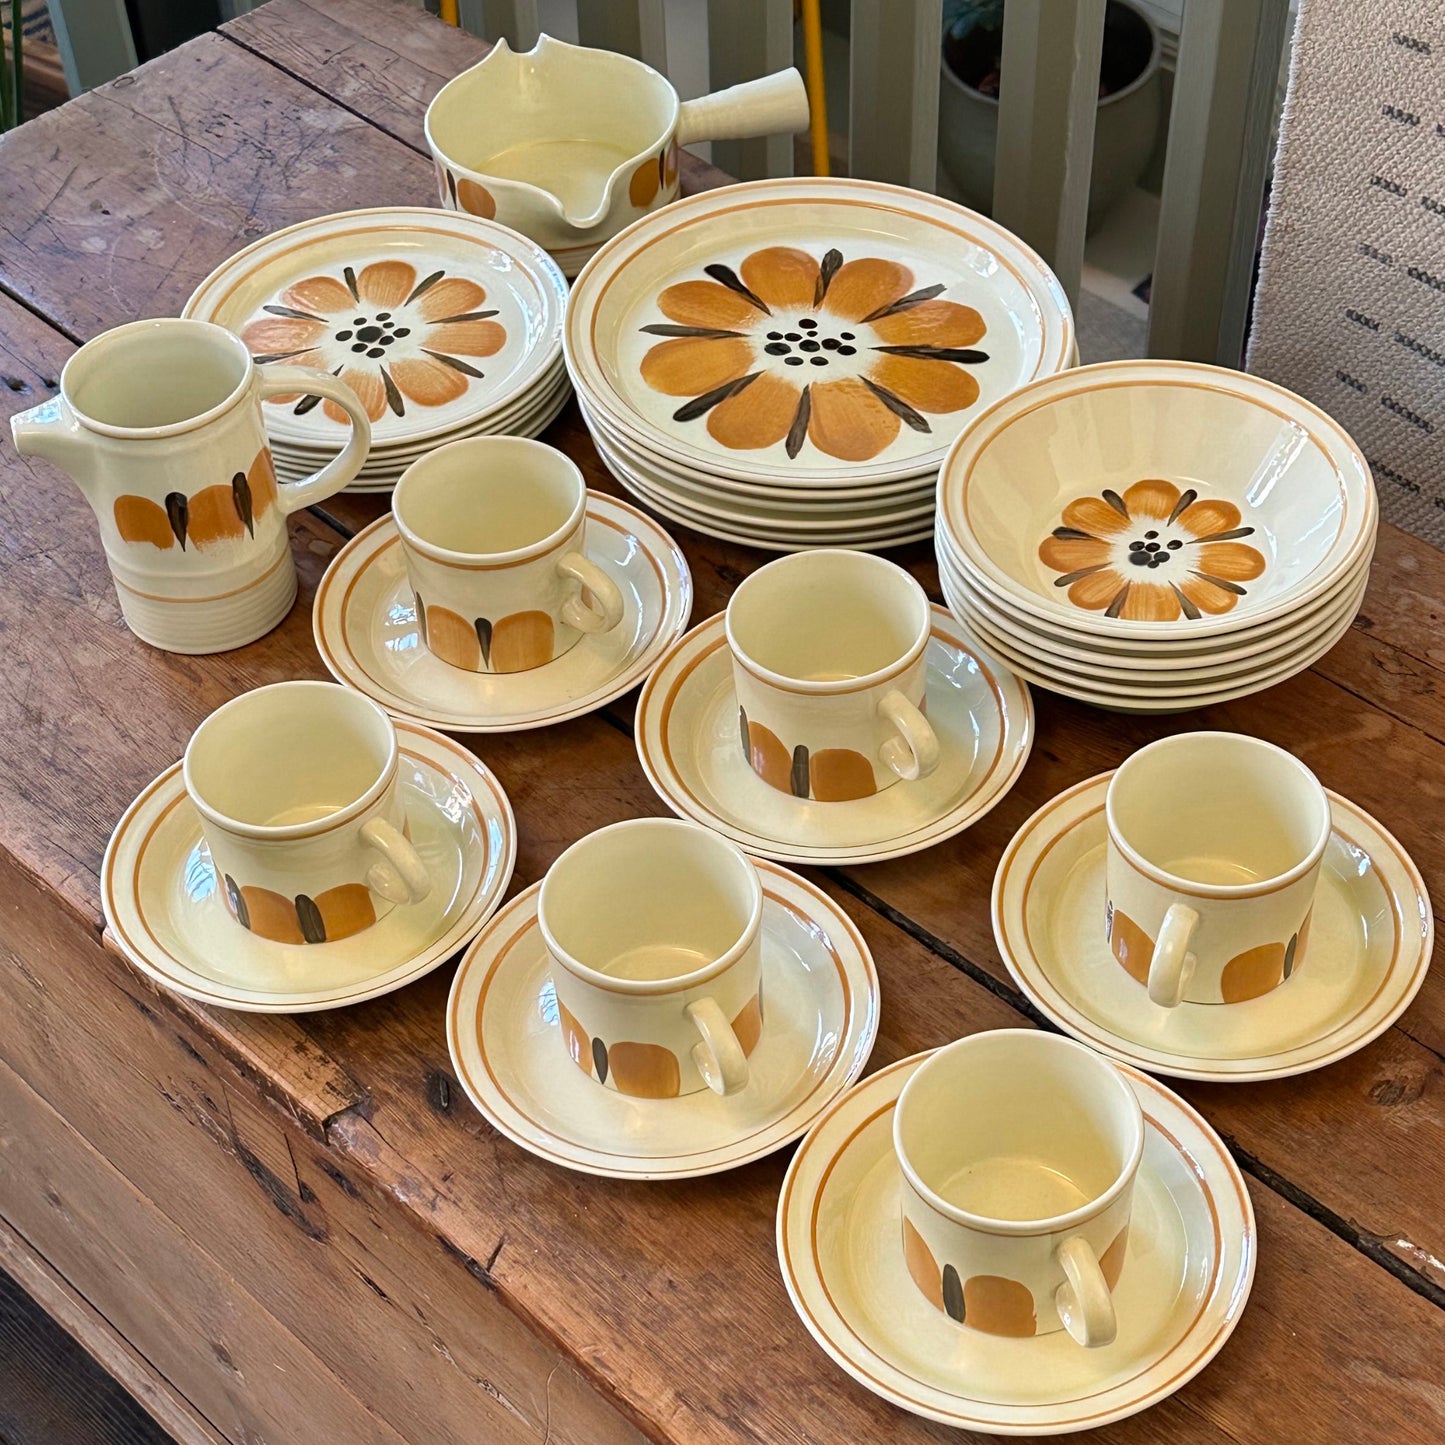 Arklow pottery, 32 piece set, 1950s